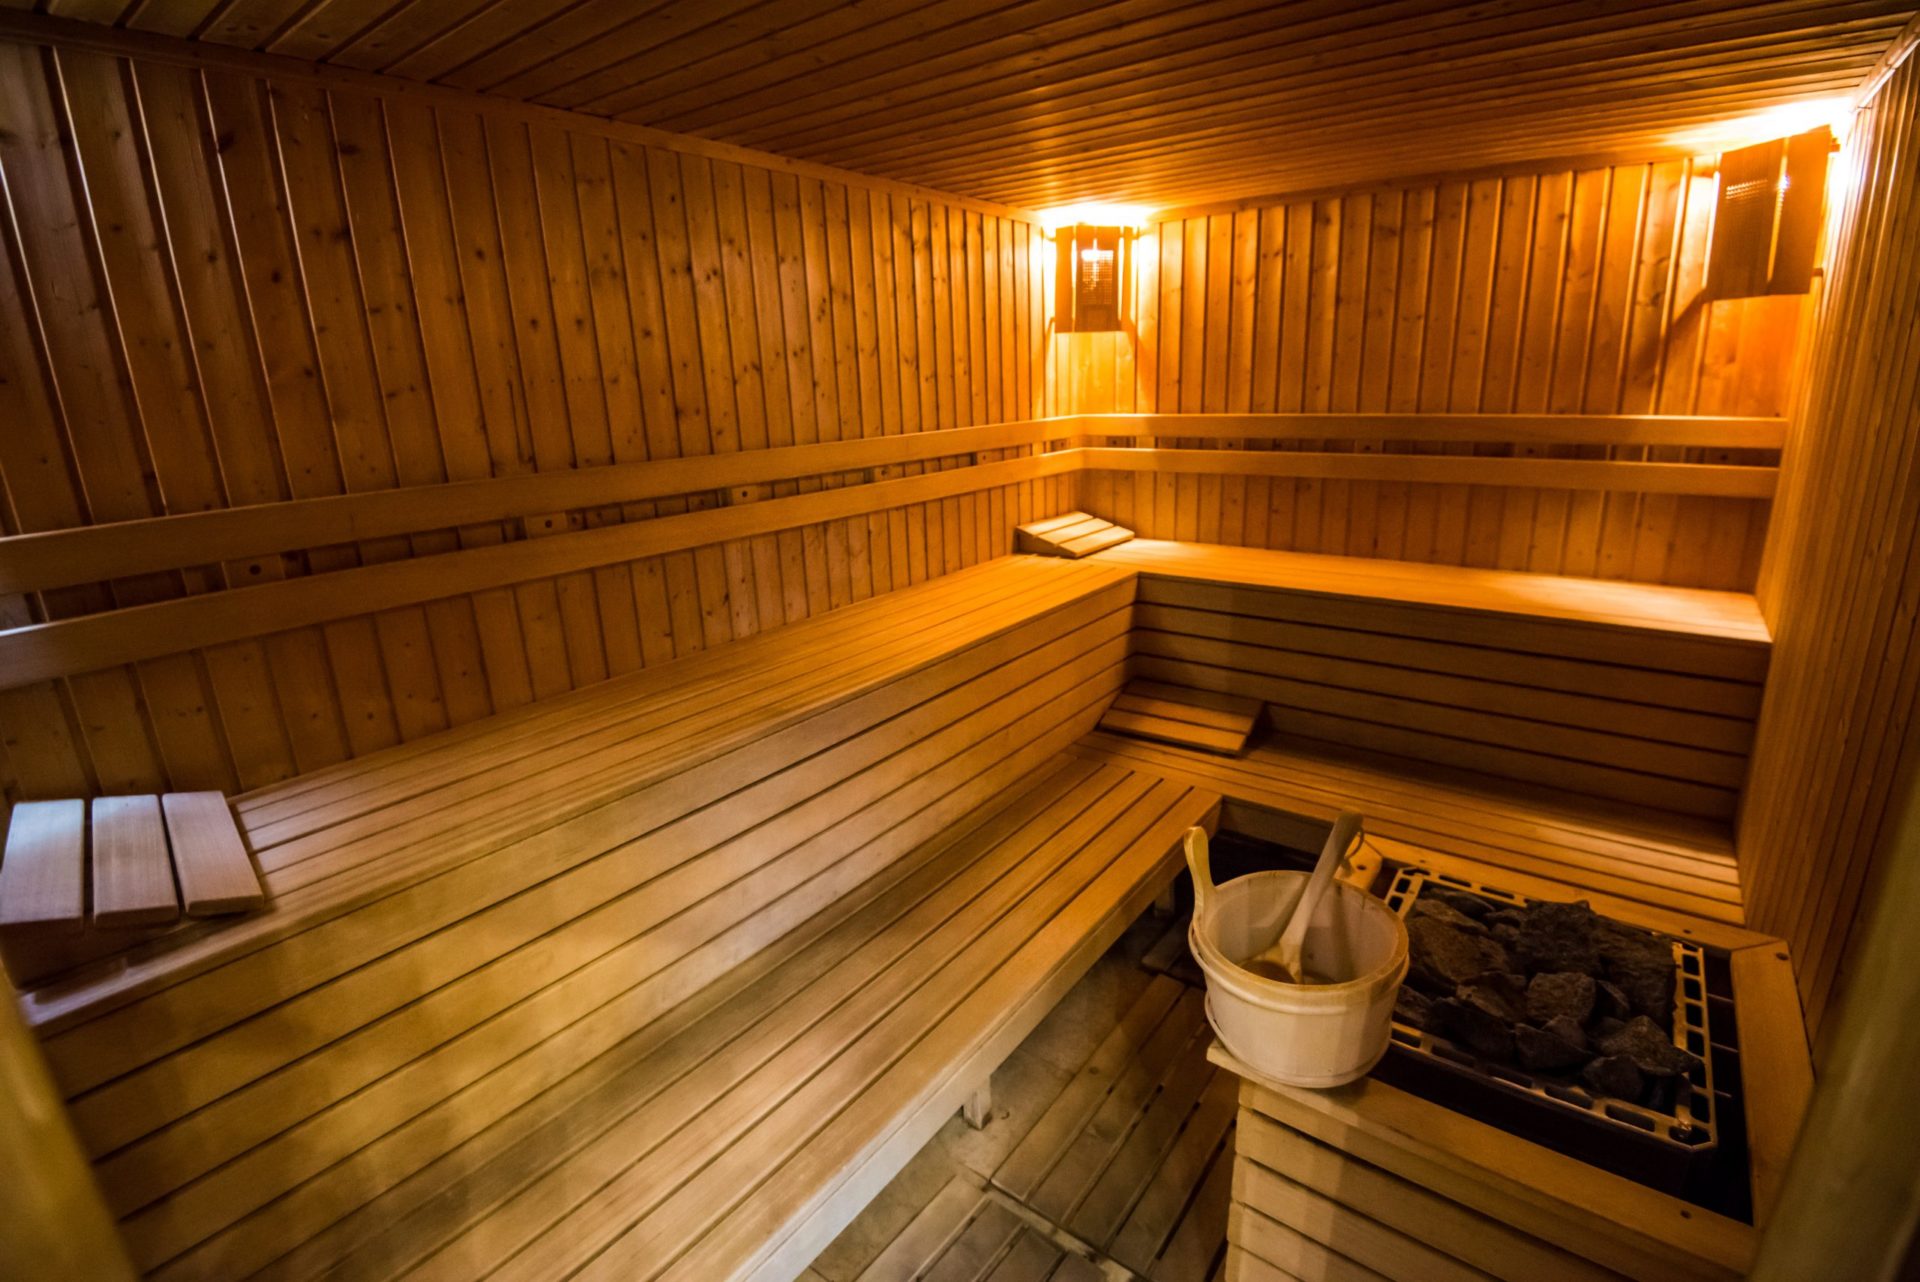 Balkan Jewel hotel - Sauna.jpg